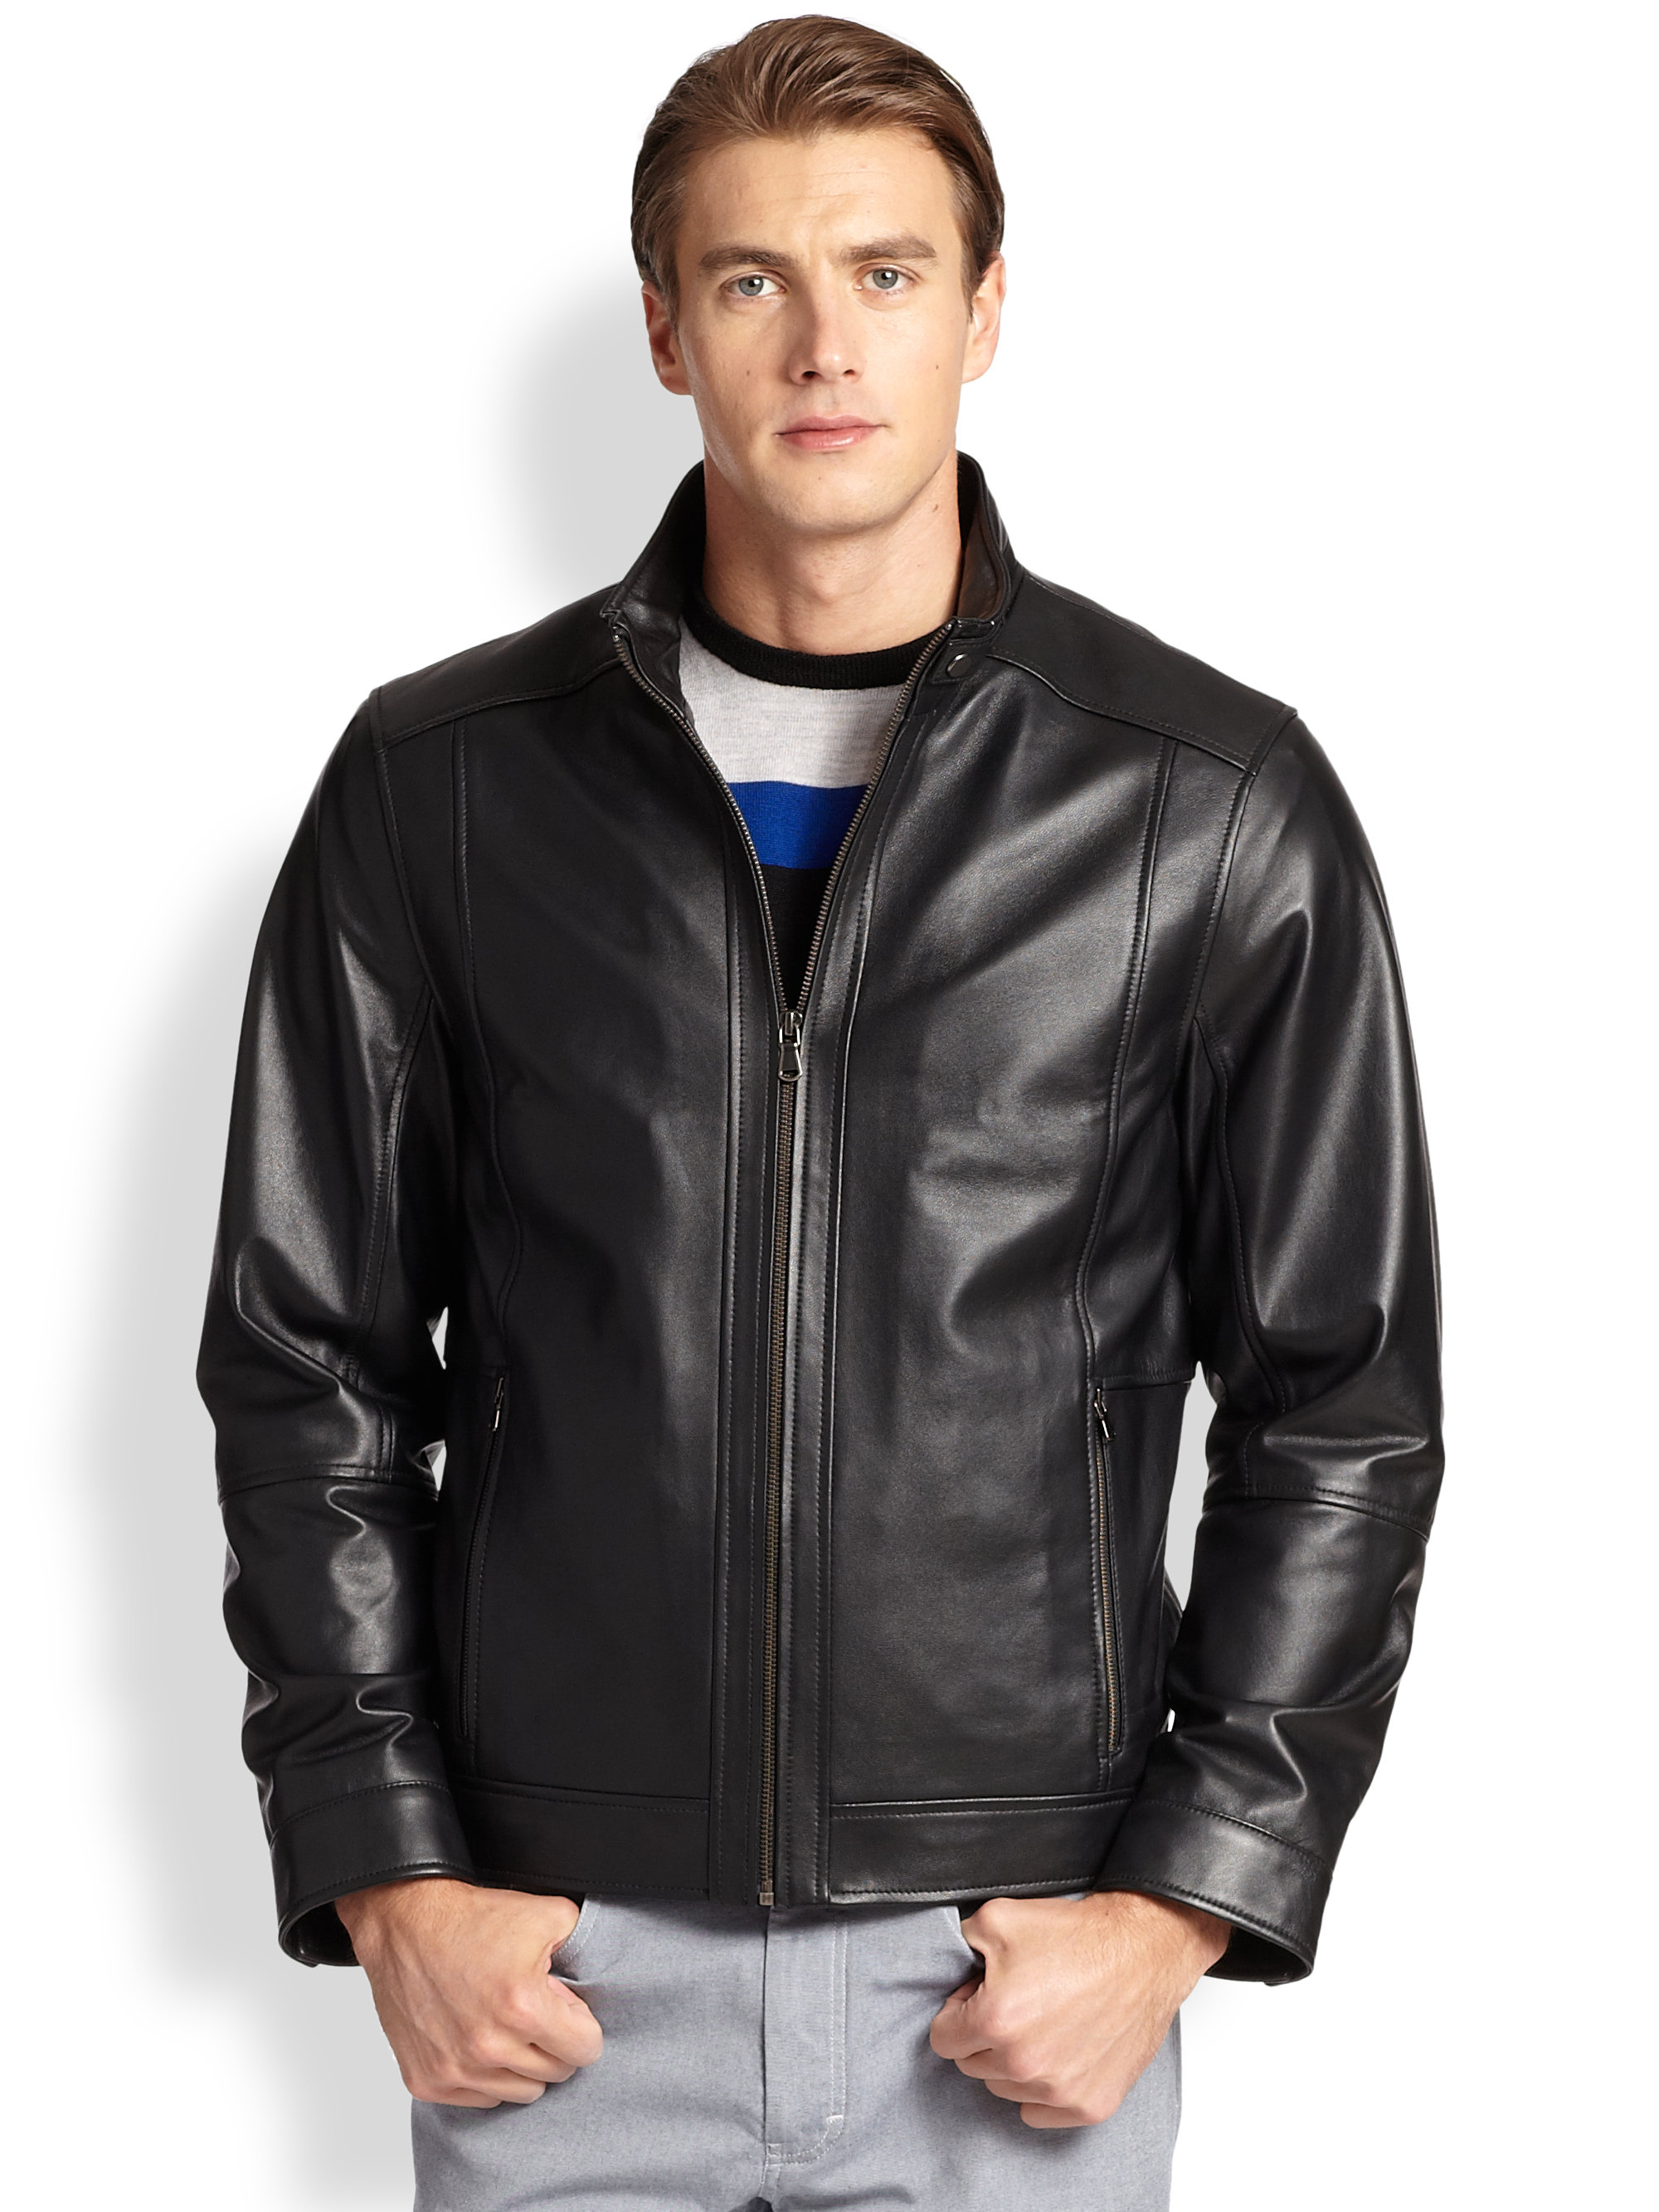 Lyst - Saks Fifth Avenue Lightweight Leather Bomber Jacket in Black for Men